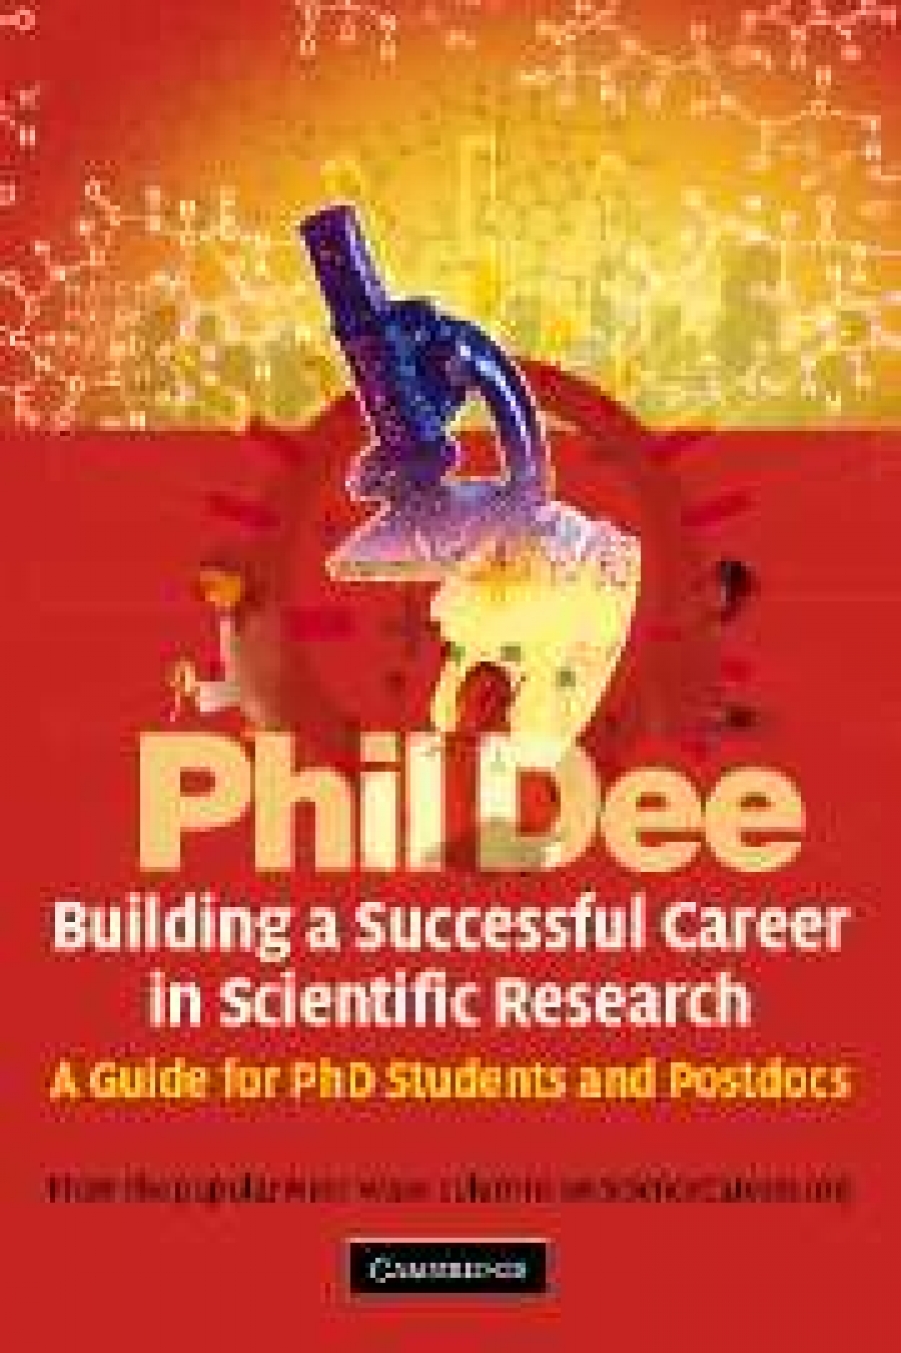 Phil Dee Building a Successful Career in Scientific Research 